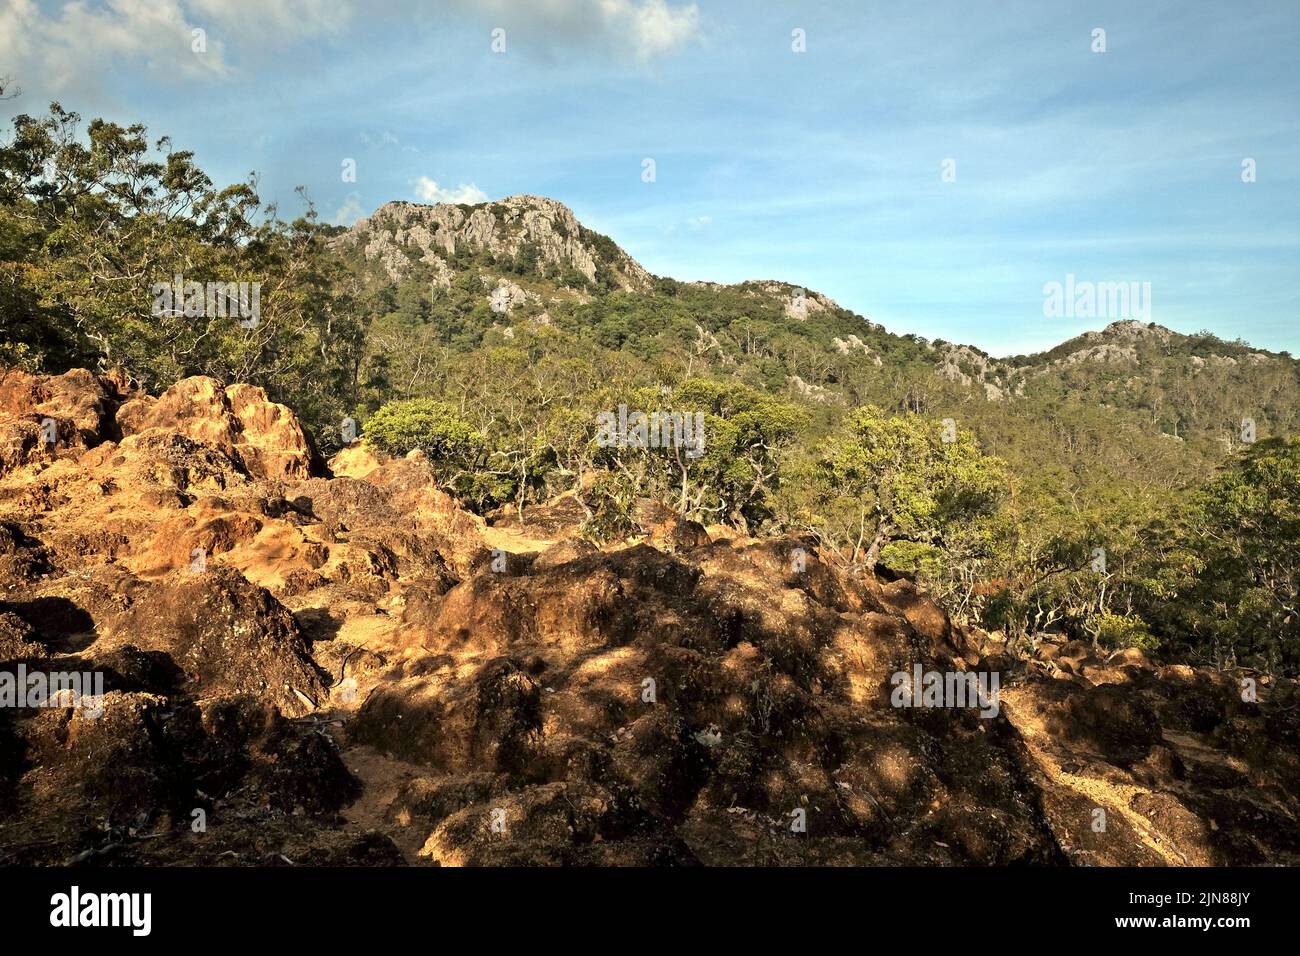 Landscape below a rocky mountain near Fatumnasi village in South Central Timor, East Nusa Tenggara, Indonesia. Stock Photo